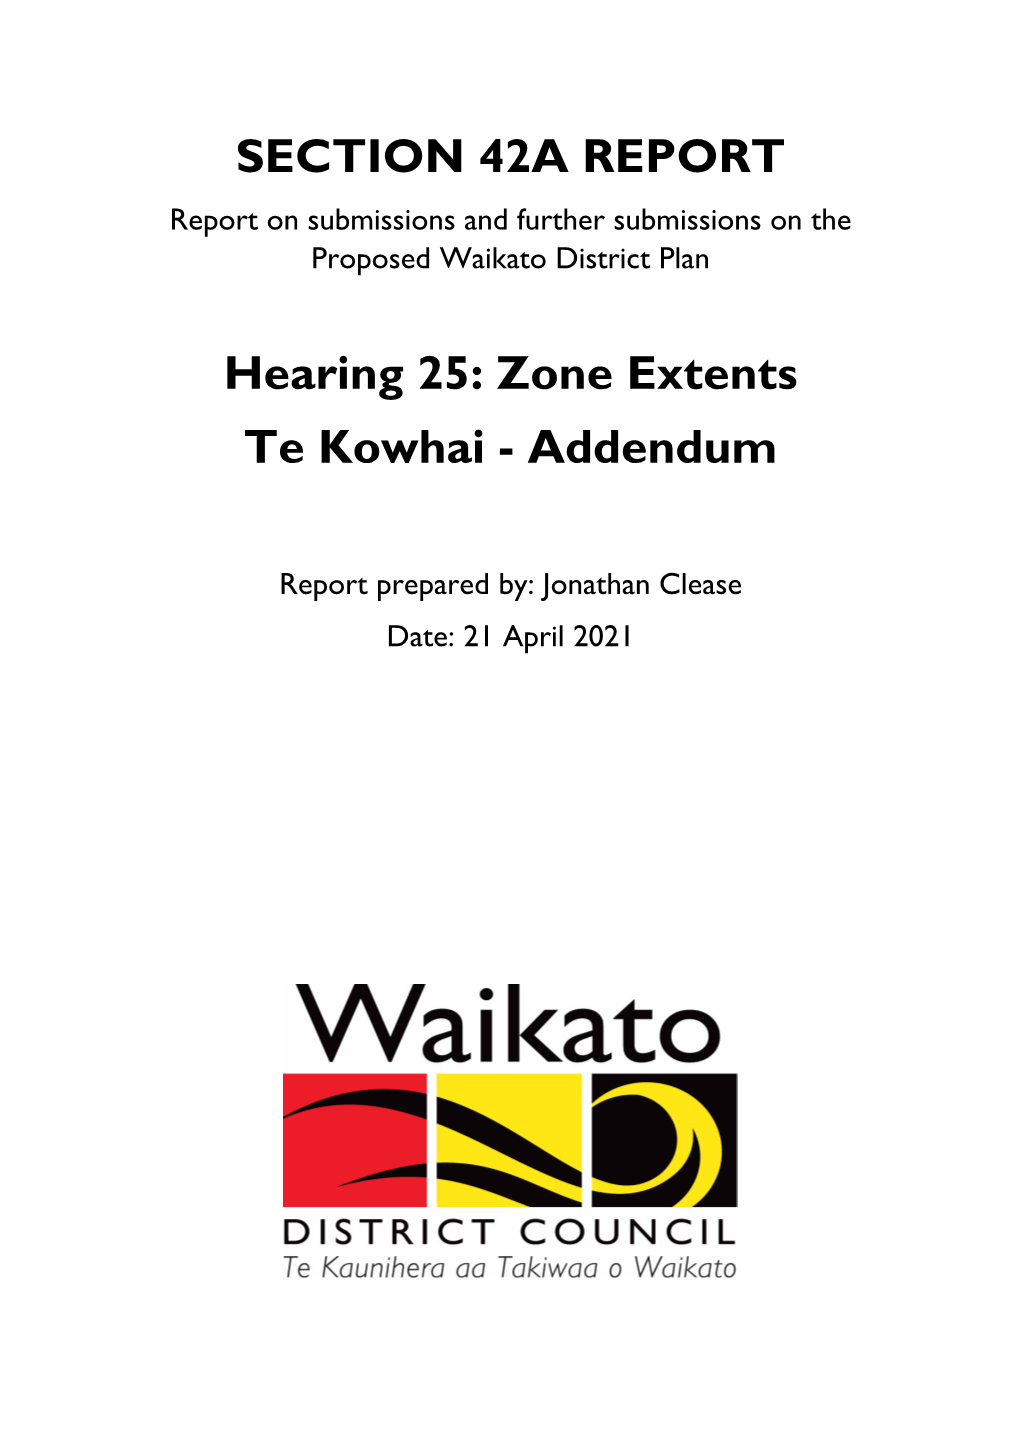 Zone Extents Te Kowhai - Addendum